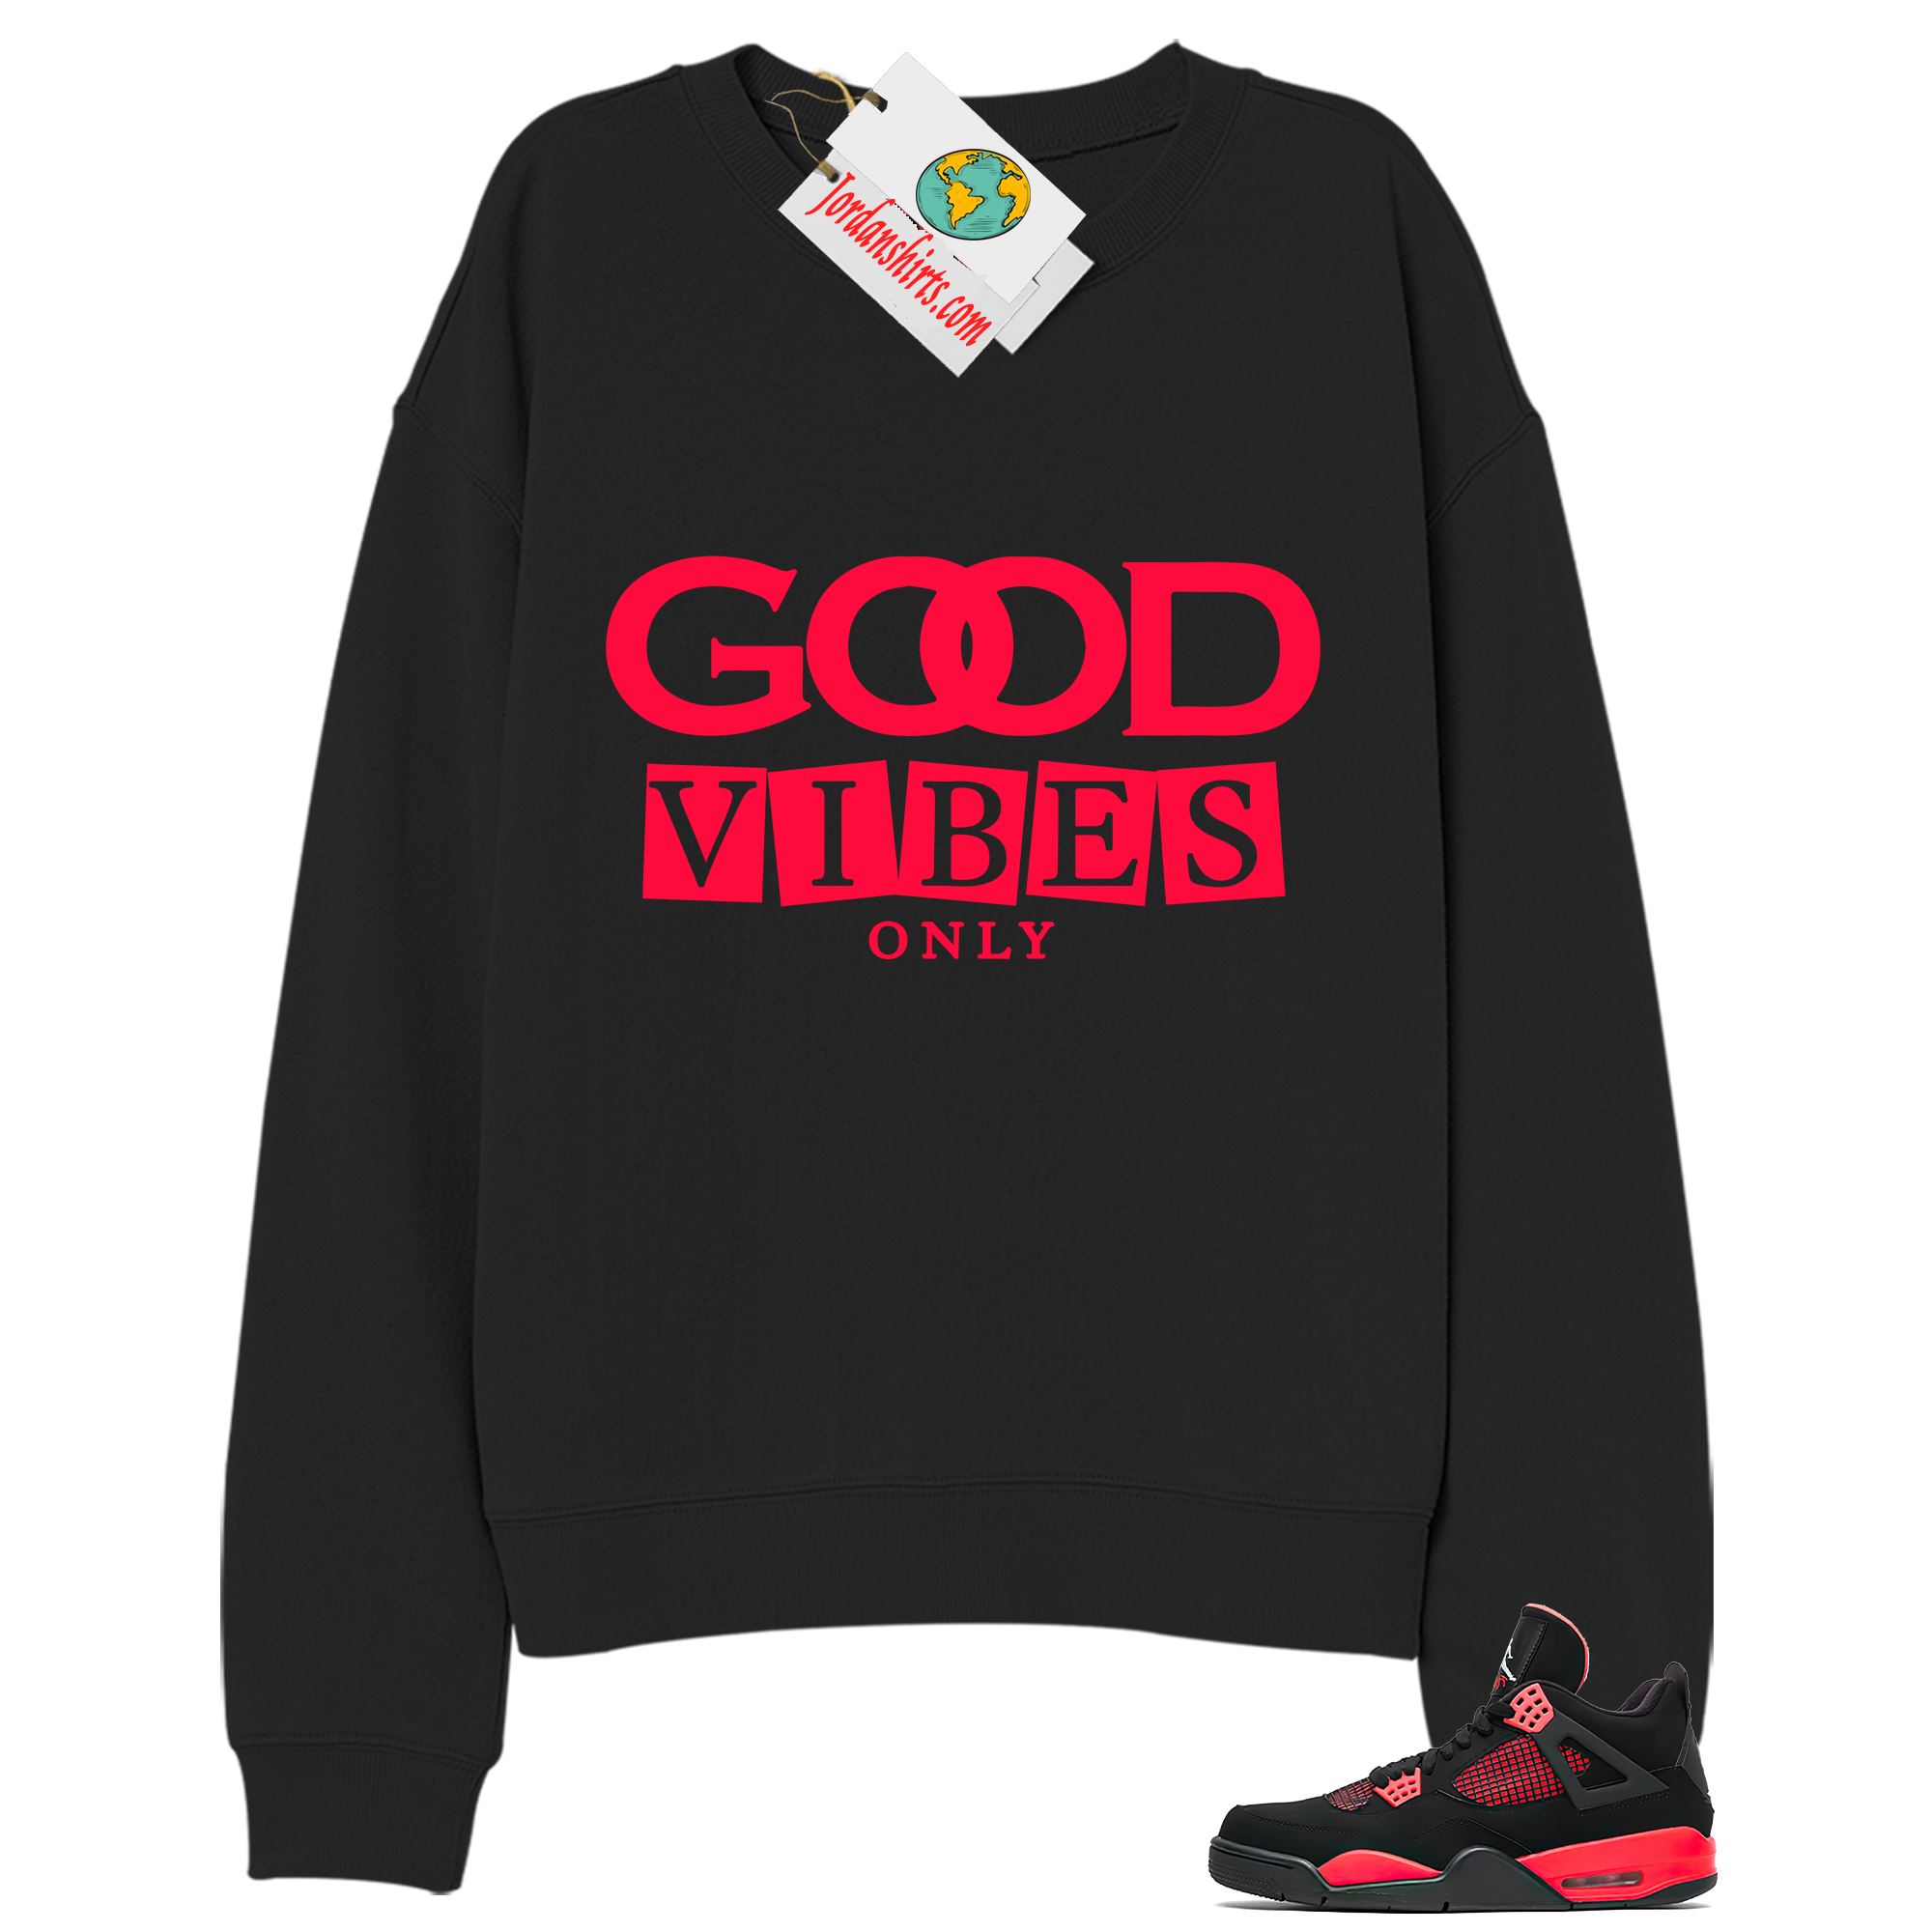 Jordan 4 Sweatshirt, Good Vibes Only Black Sweatshirt Air Jordan 4 Red Thunder 4s Size Up To 5xl